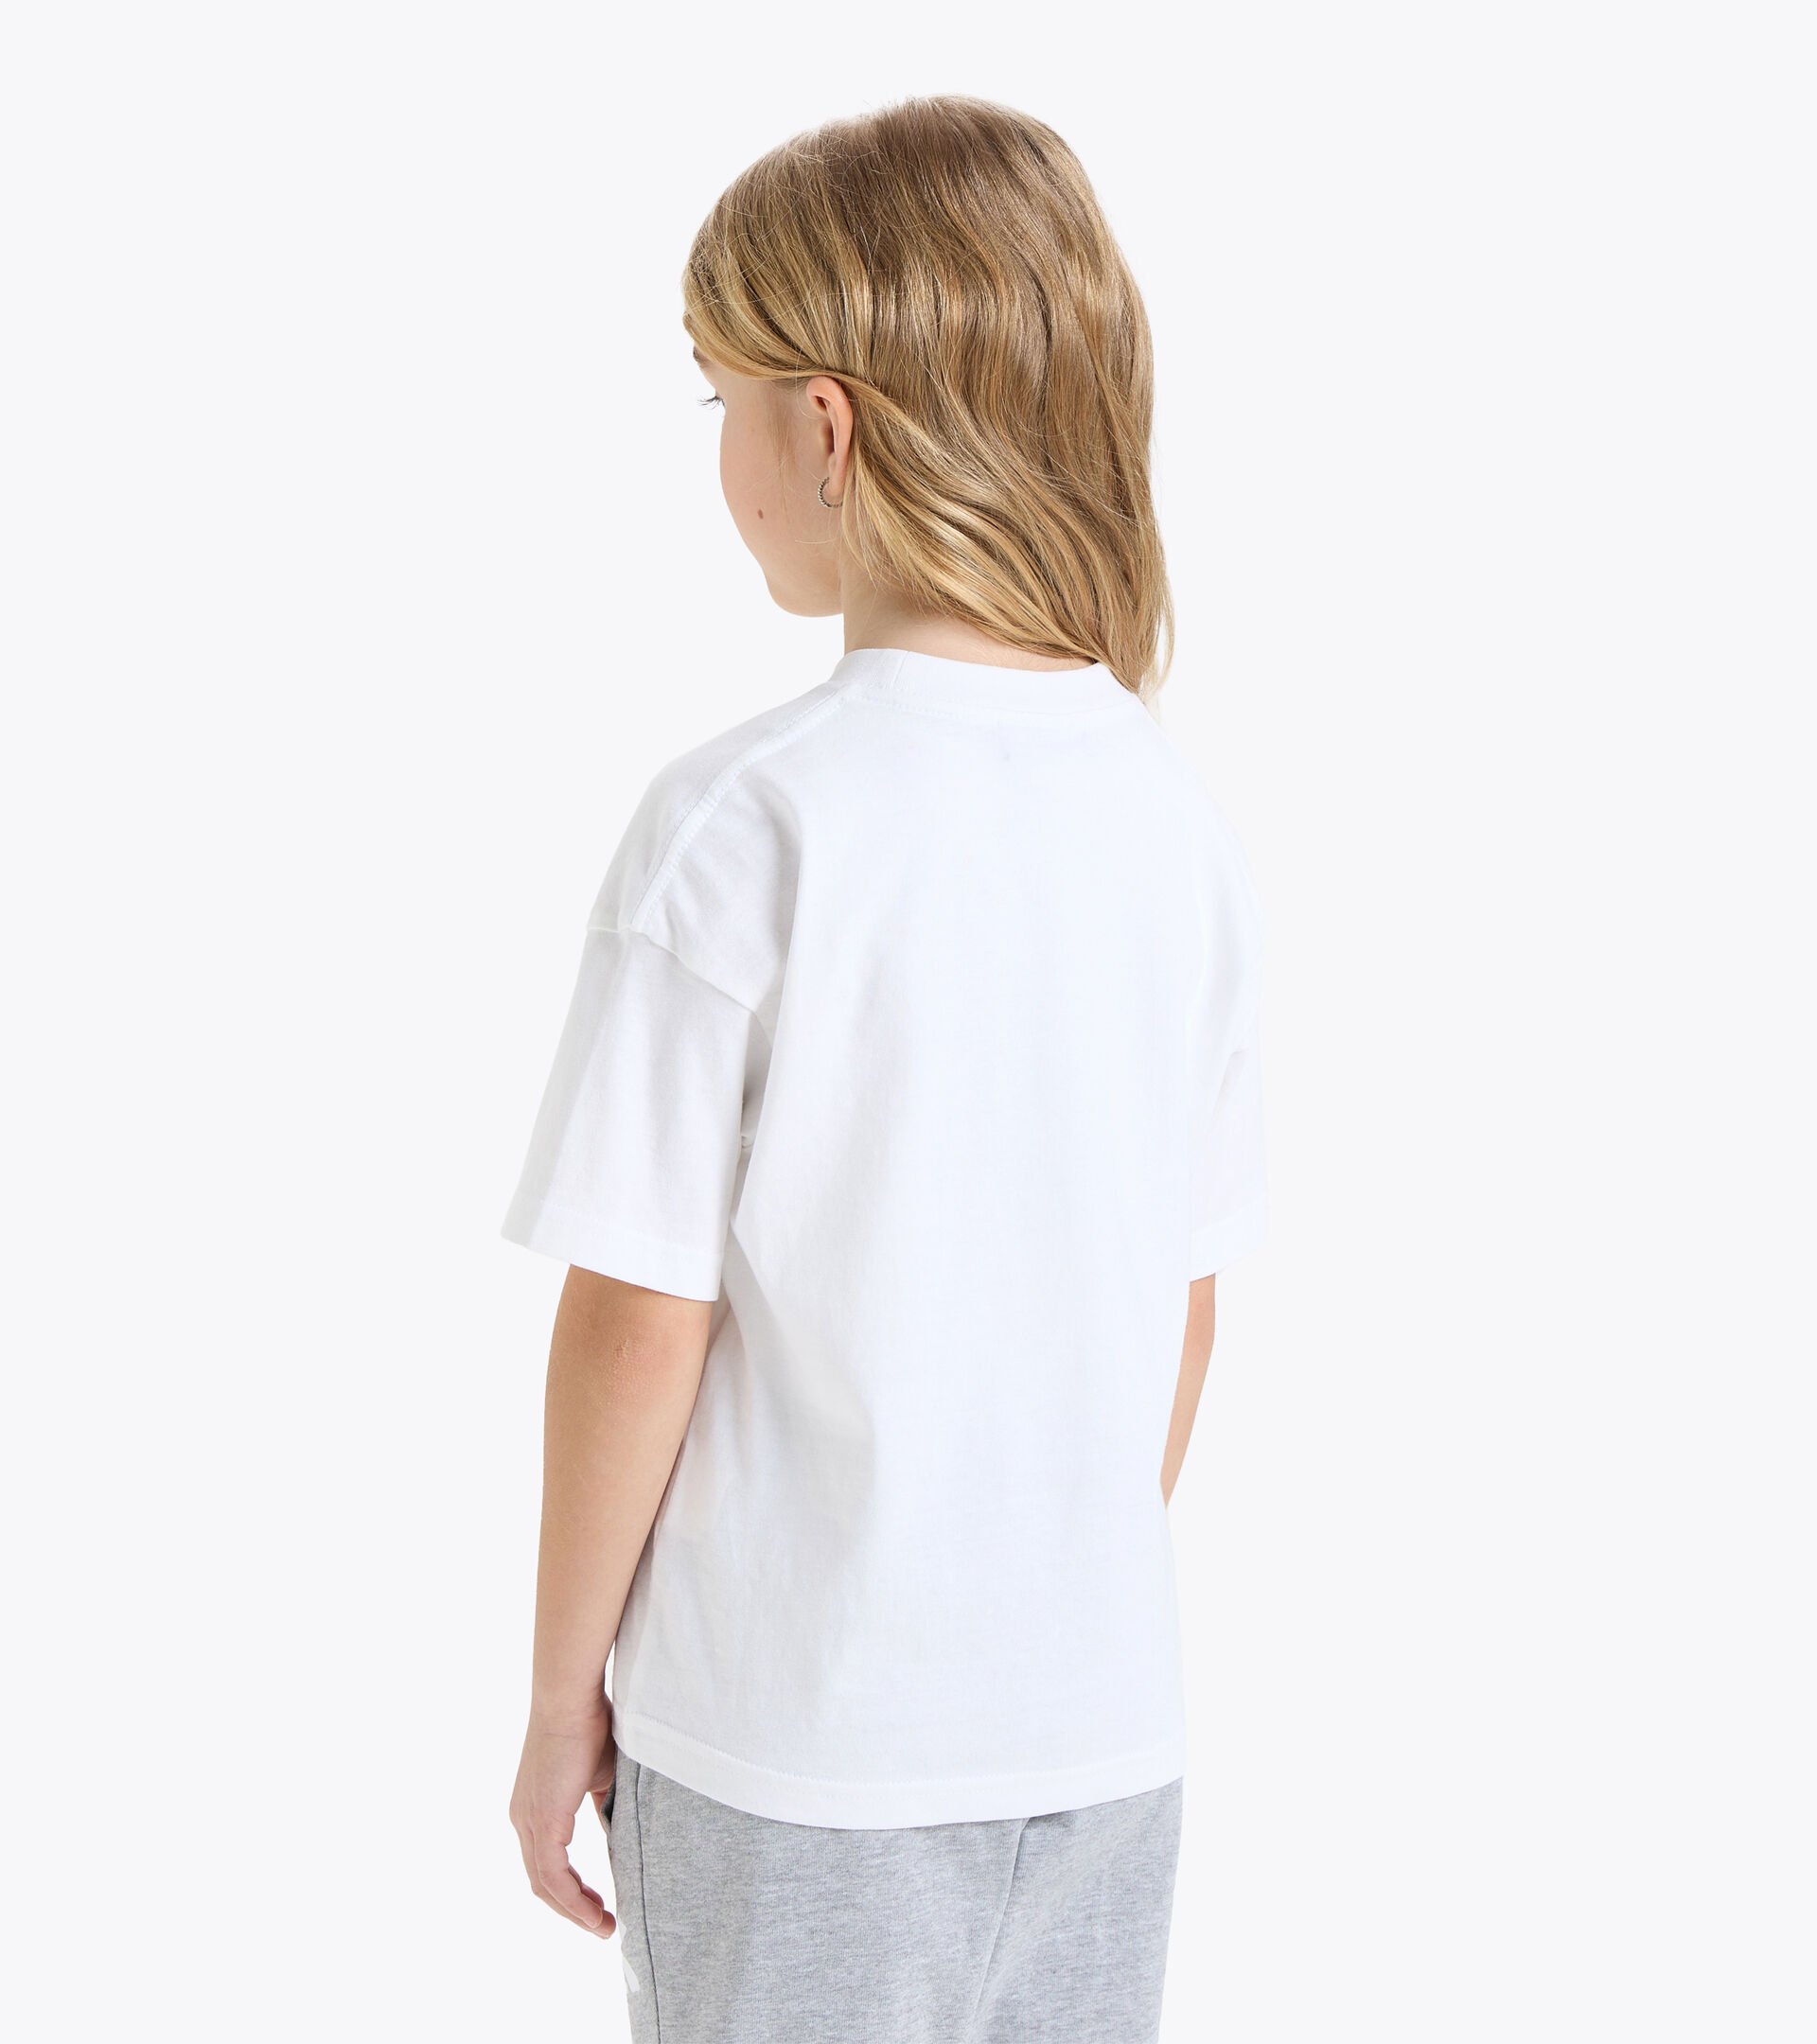 Camiseta de algodón - Niños y niñas
 JU.T-SHIRT SS SL BLANCO VIVO - Diadora